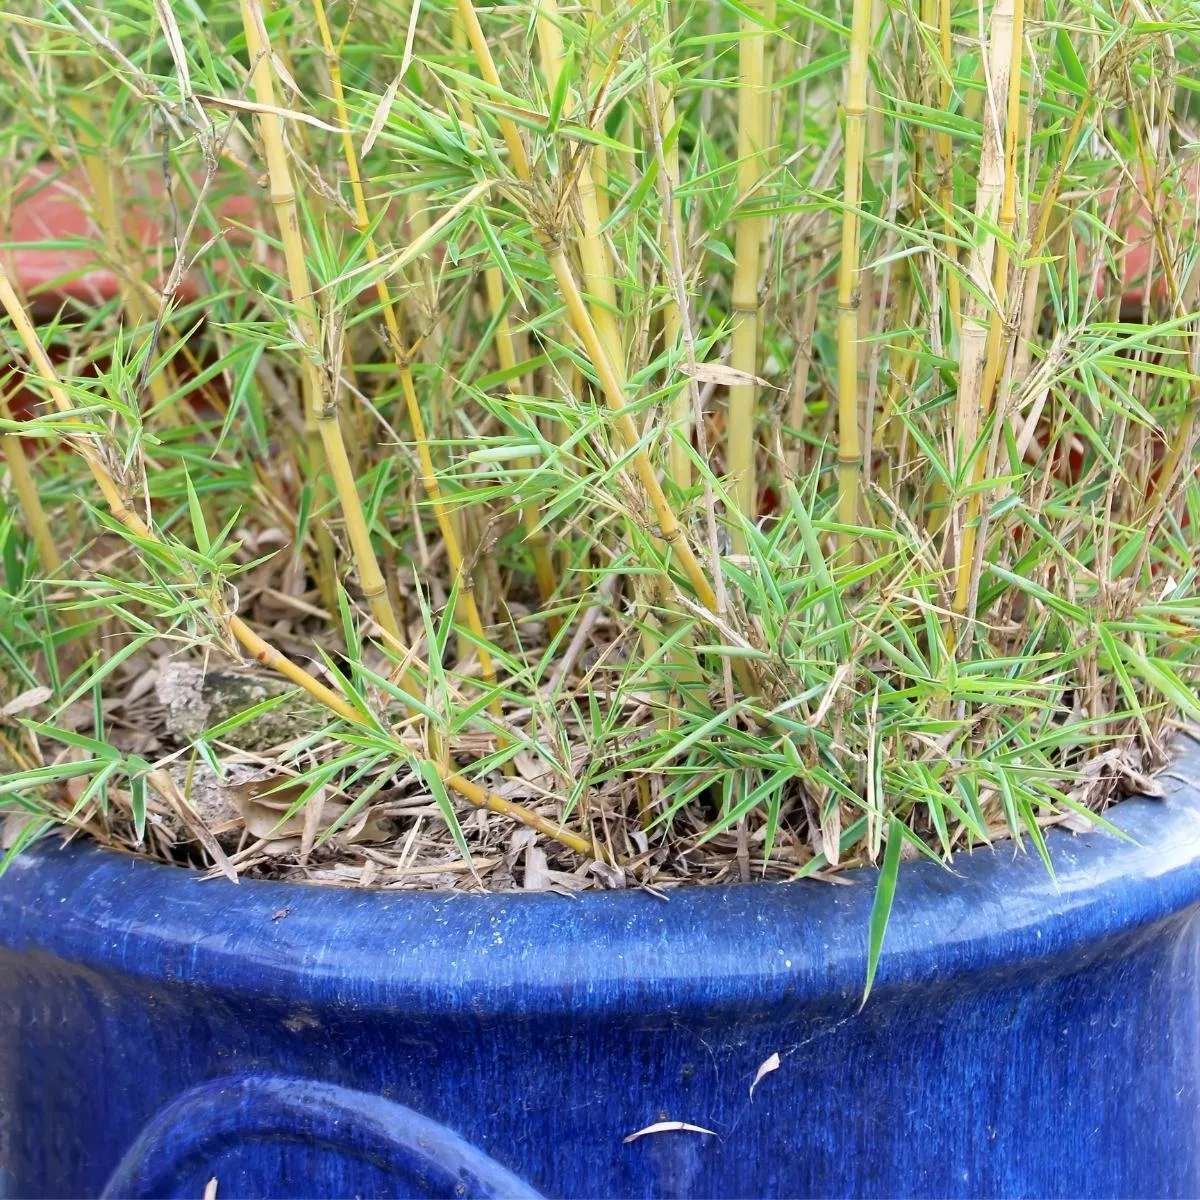 bamboo growing in pot